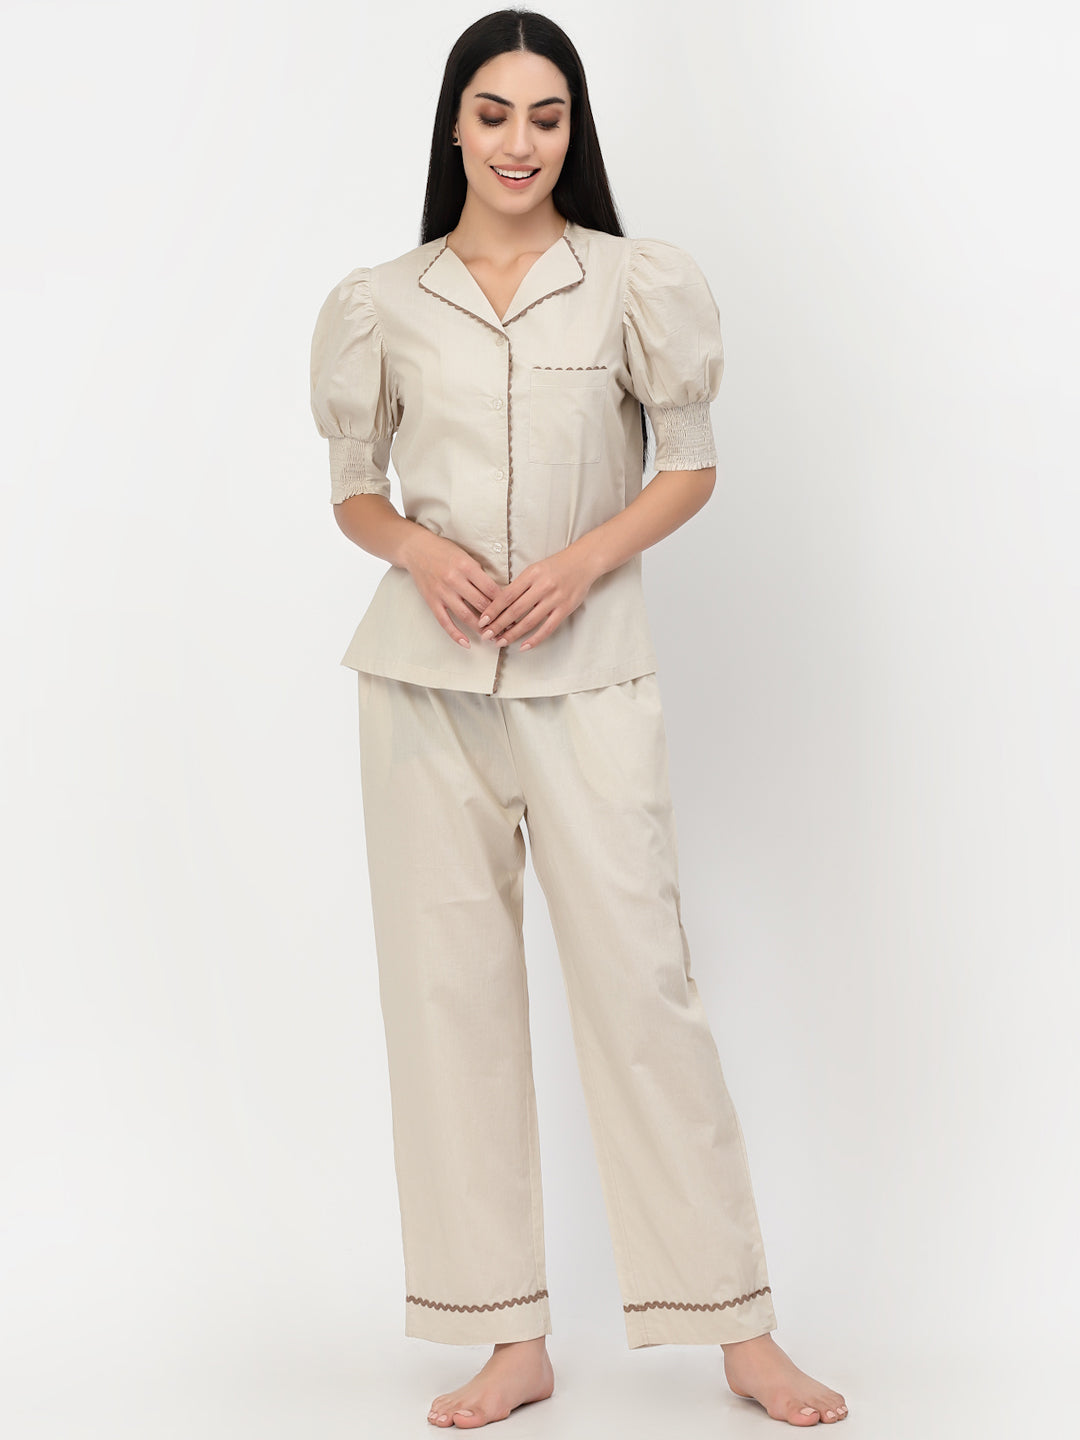 Blanc9 Beige With Light Brown Lace Cotton Pyjama Night Suit-B9NW33BG